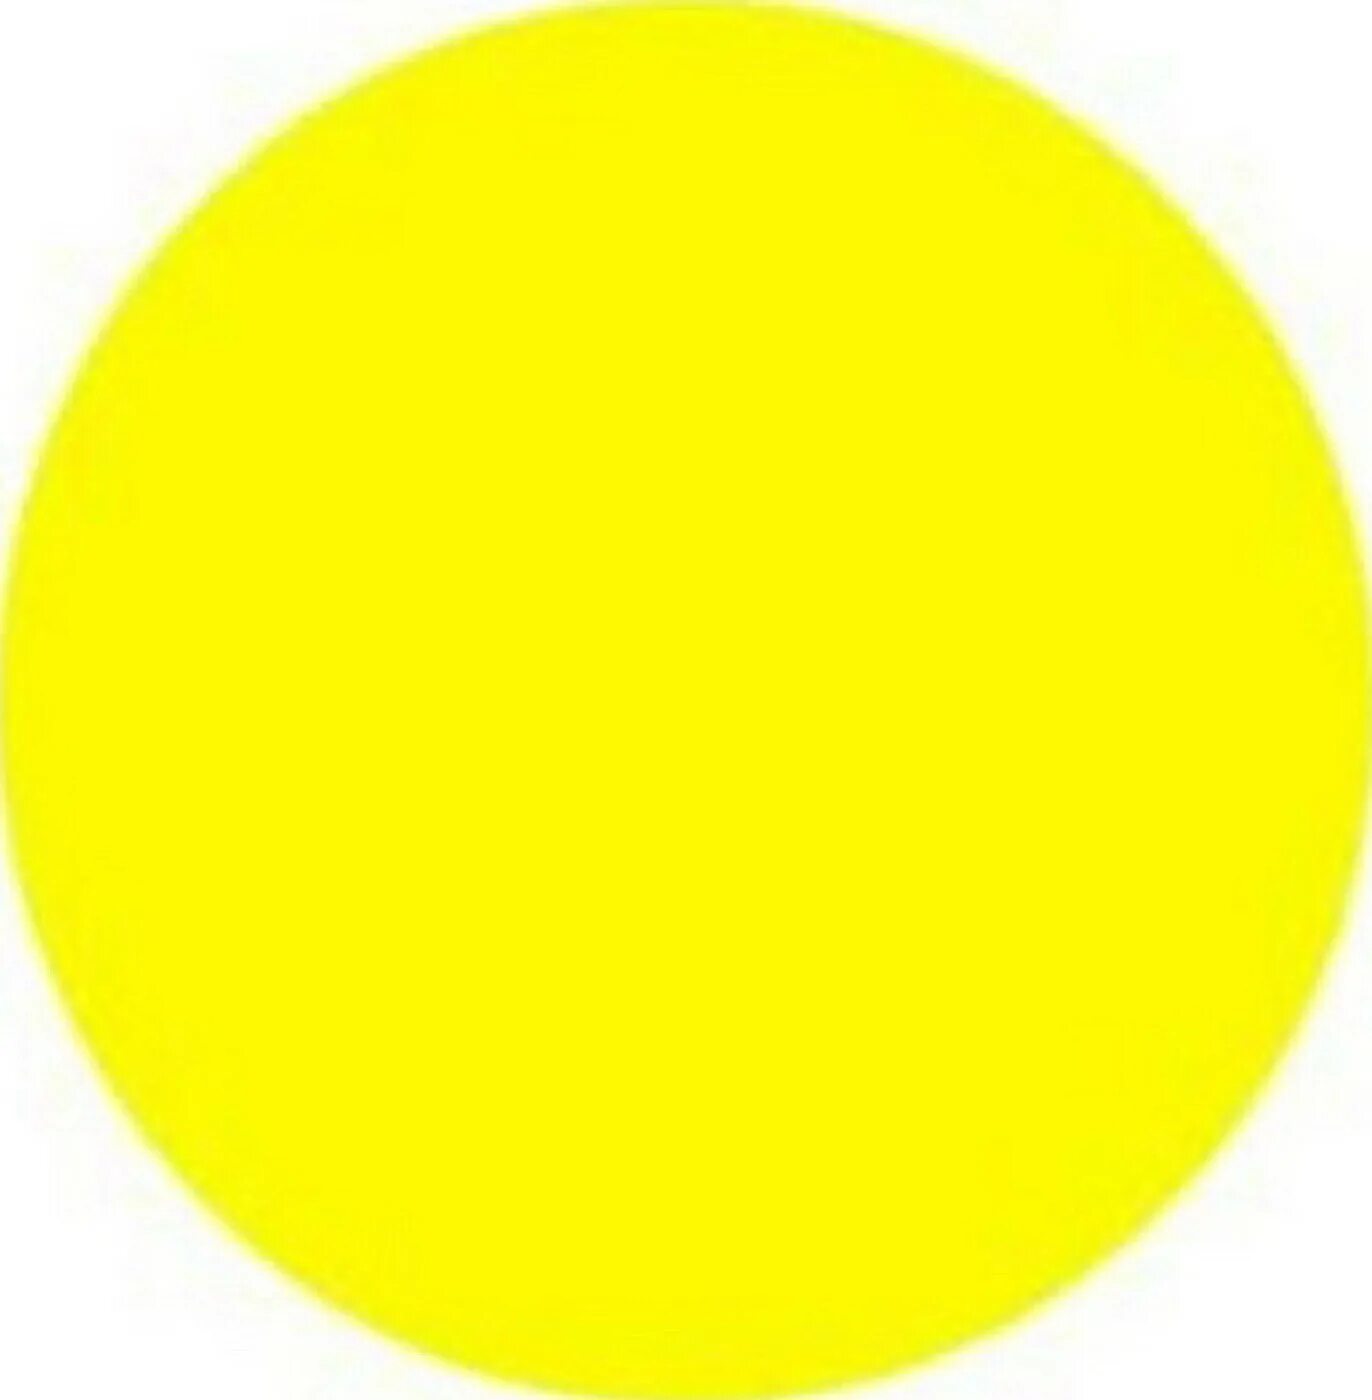 Круг желтый лист. Желтый кружок. Желтый круг на двери для слабовидящих. Круг желтого цвета. Желтая Кружка.